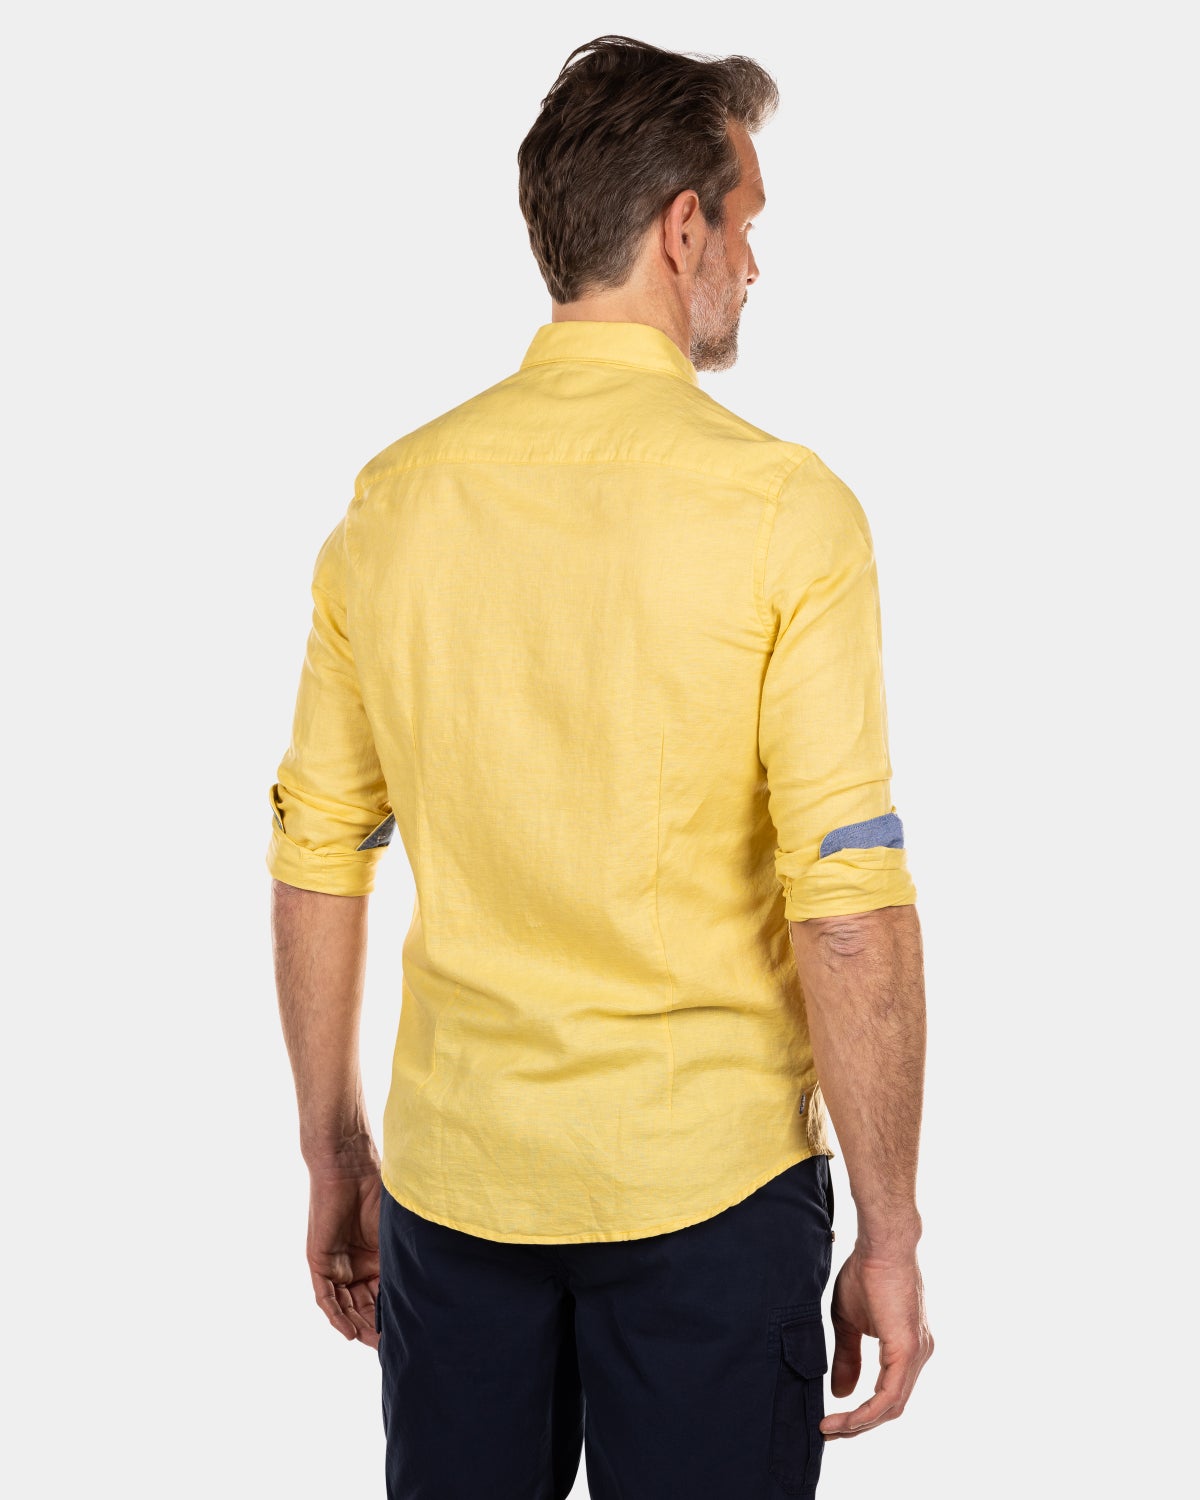 Plain linen shirt in many colors - Iguana Yellow